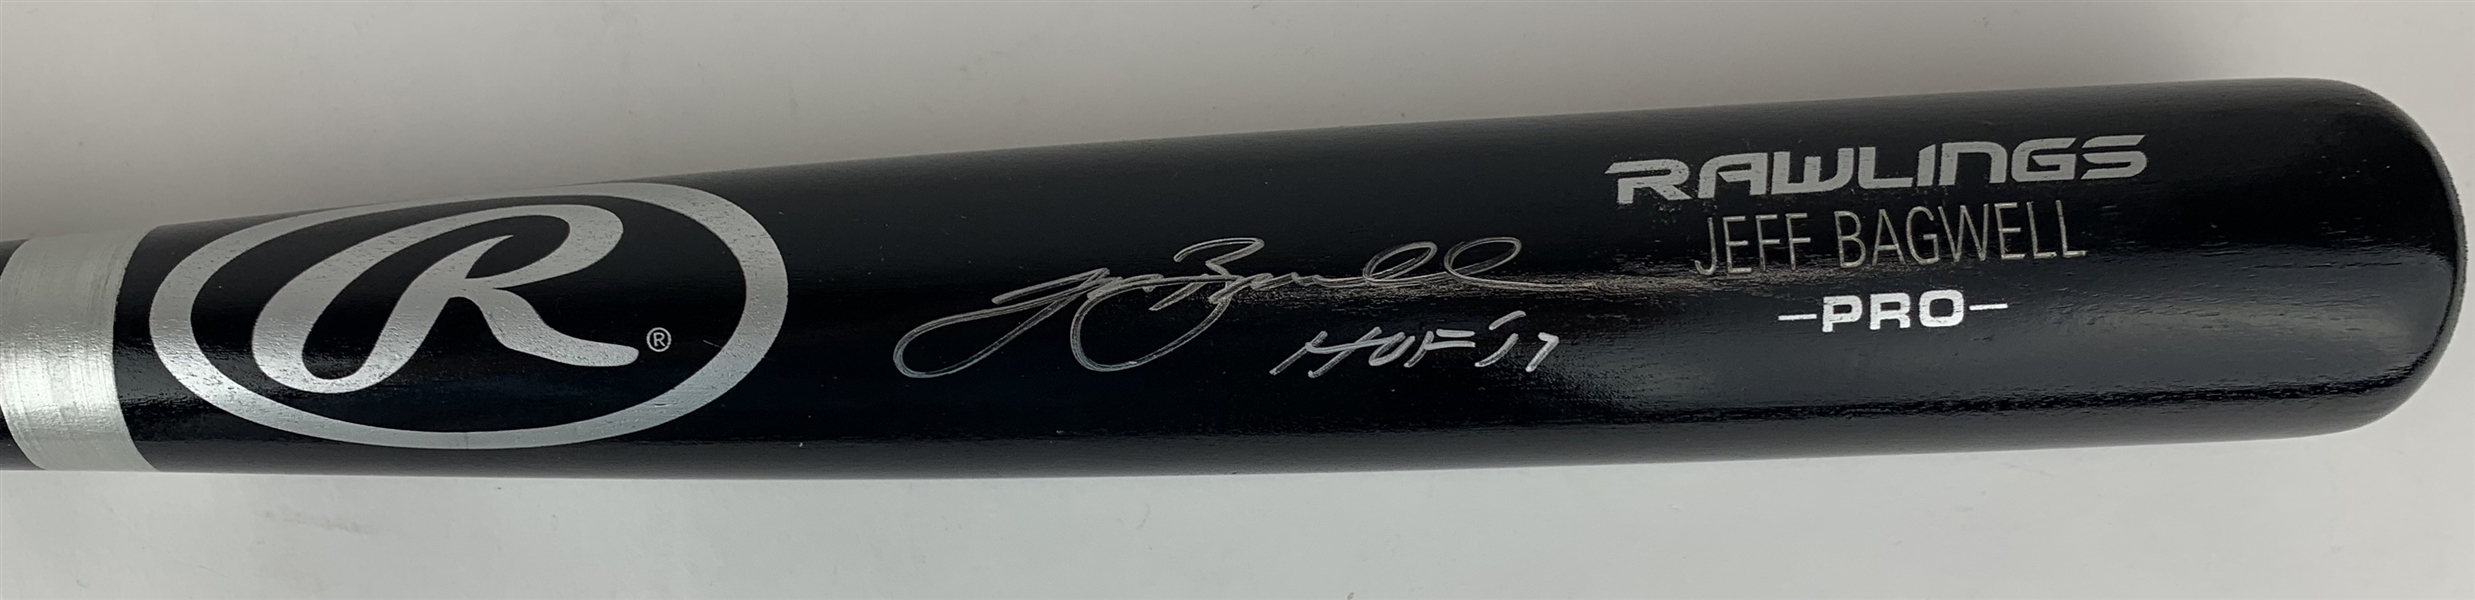 Jeff Bagwell Signed Rawlings Pro Baseball Bat w/ "HOF 17" Inscription (TriStar)